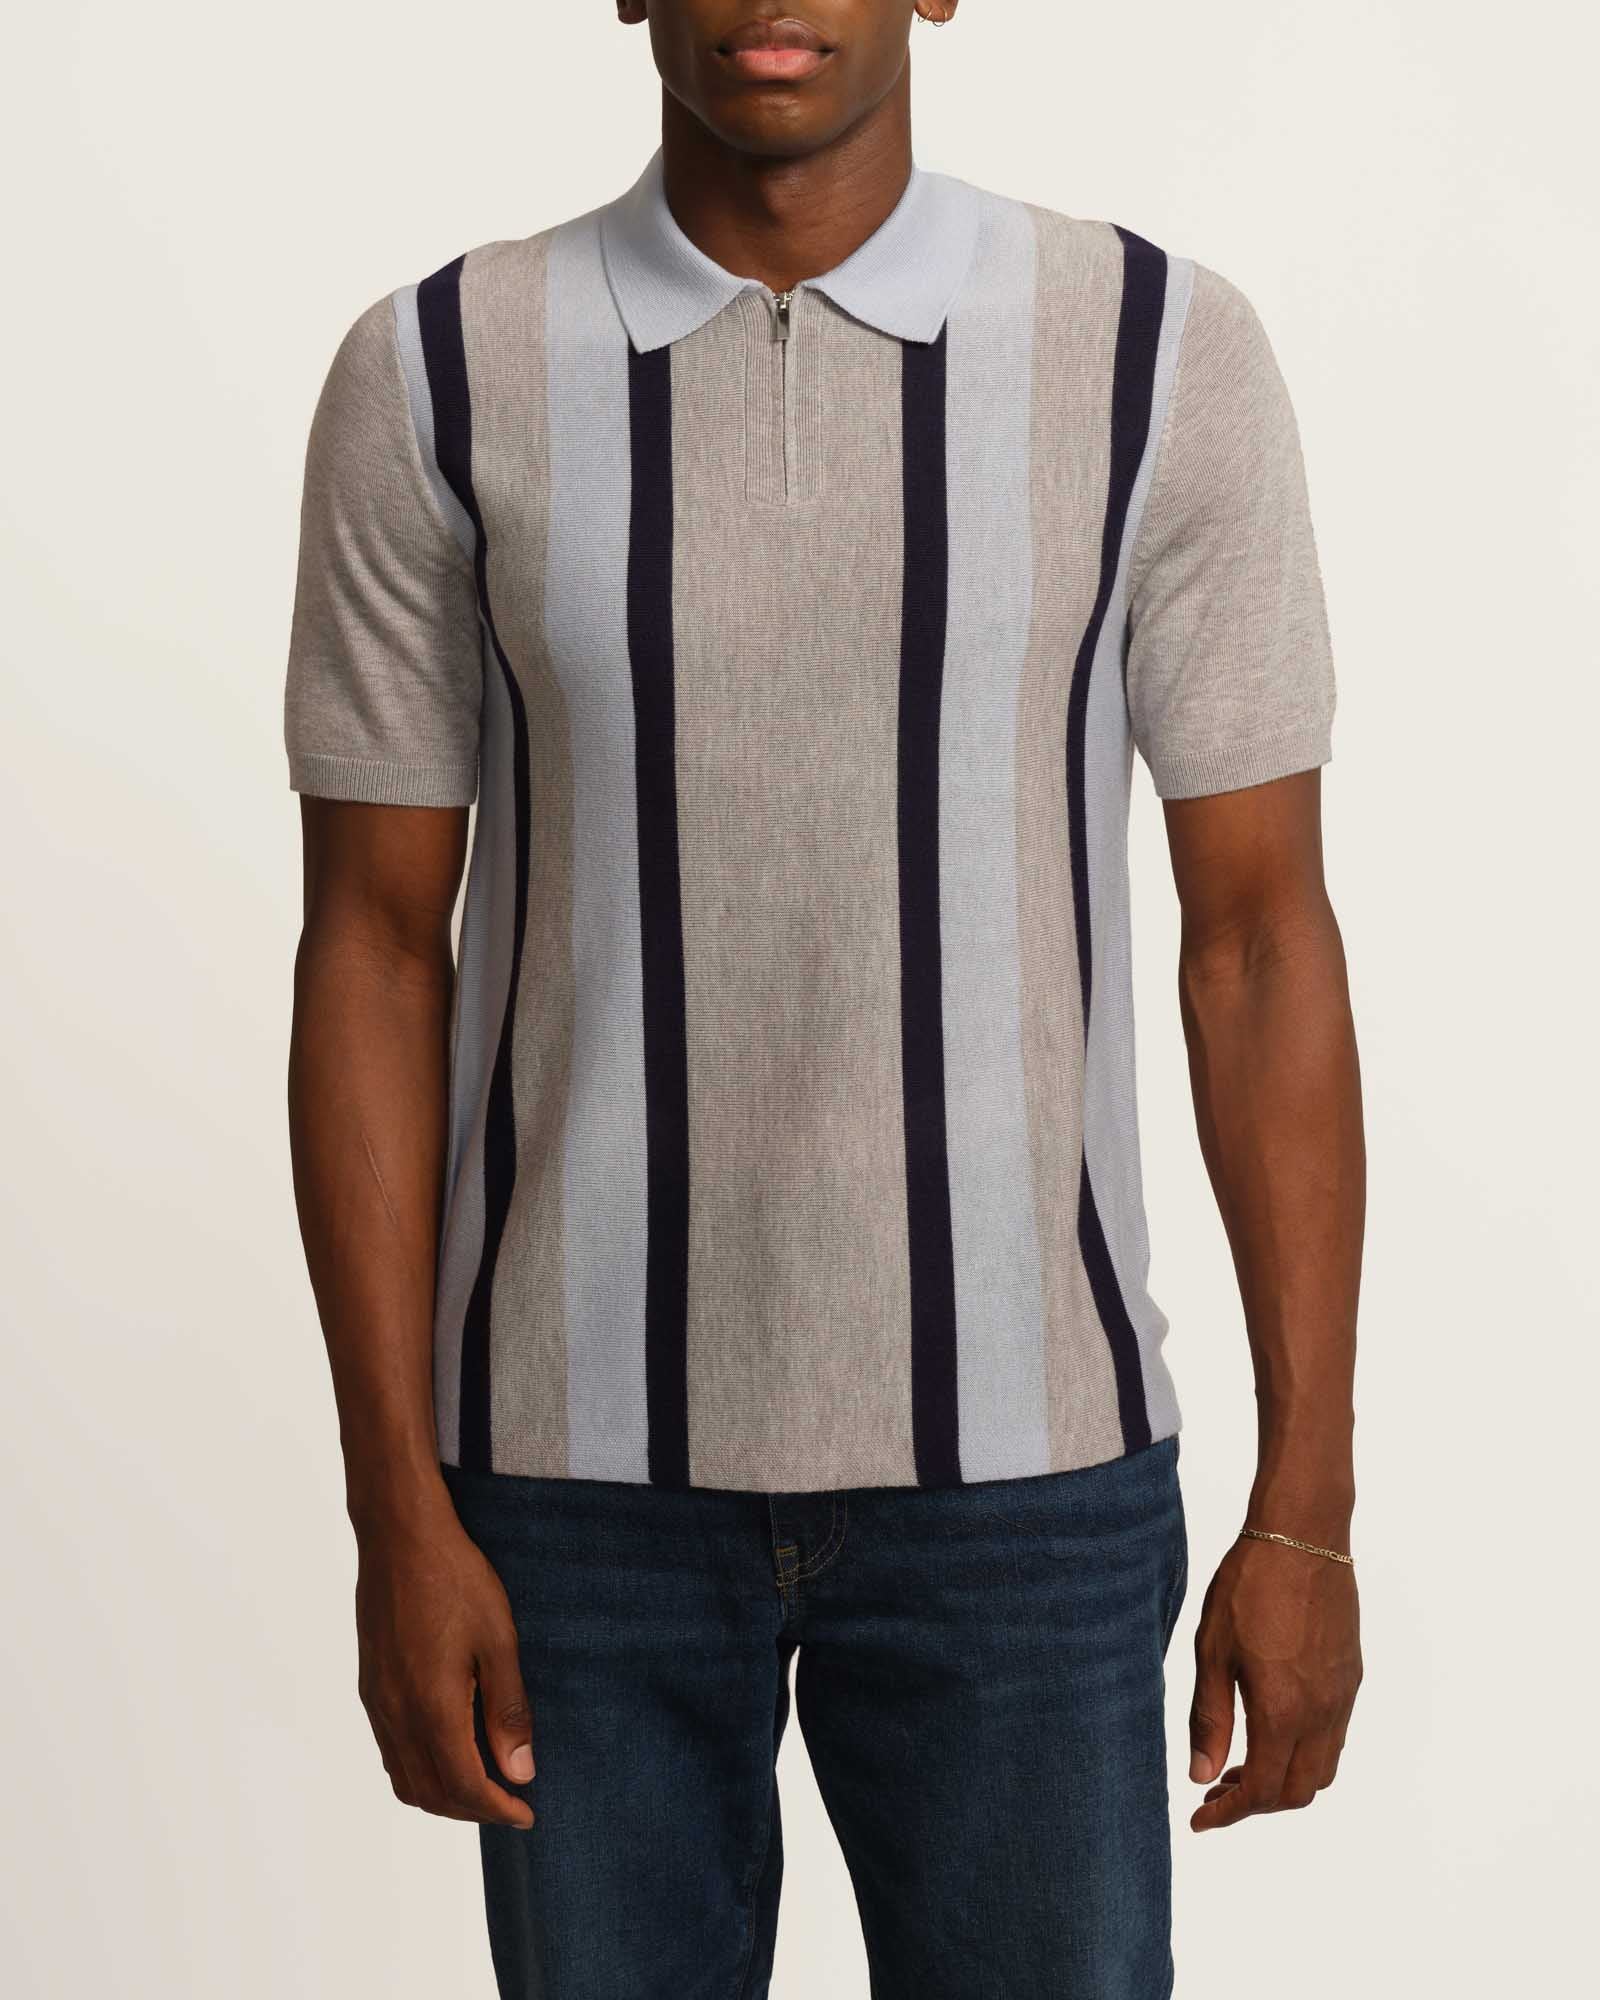 Elie Tahari Men's Quarter Zip Tri-Stripe Sweater Polo | JANE + MERCER